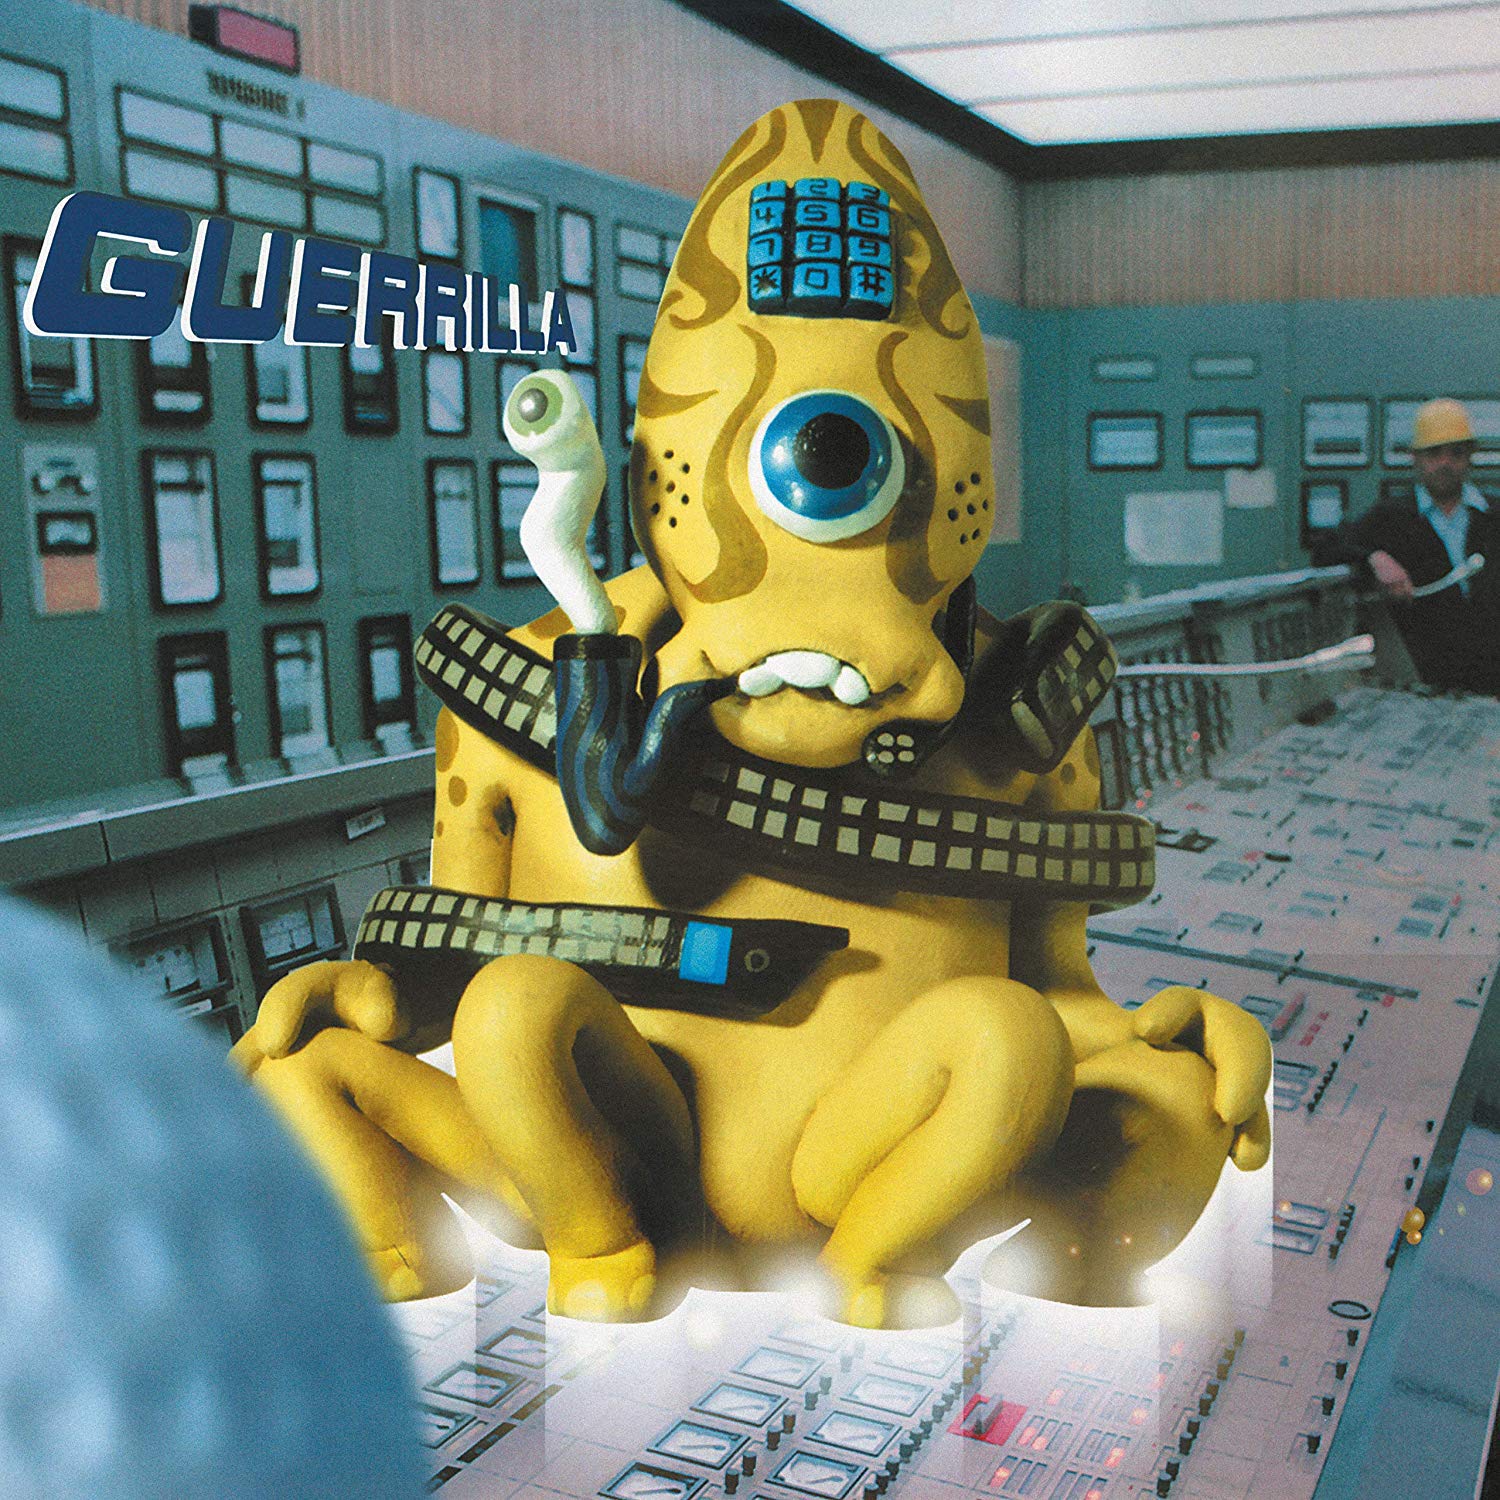 Super Furry Animals - Guerrilla (20th Anniversary Edition / Remastered) (2019) [FLAC 24bit/48kHz]